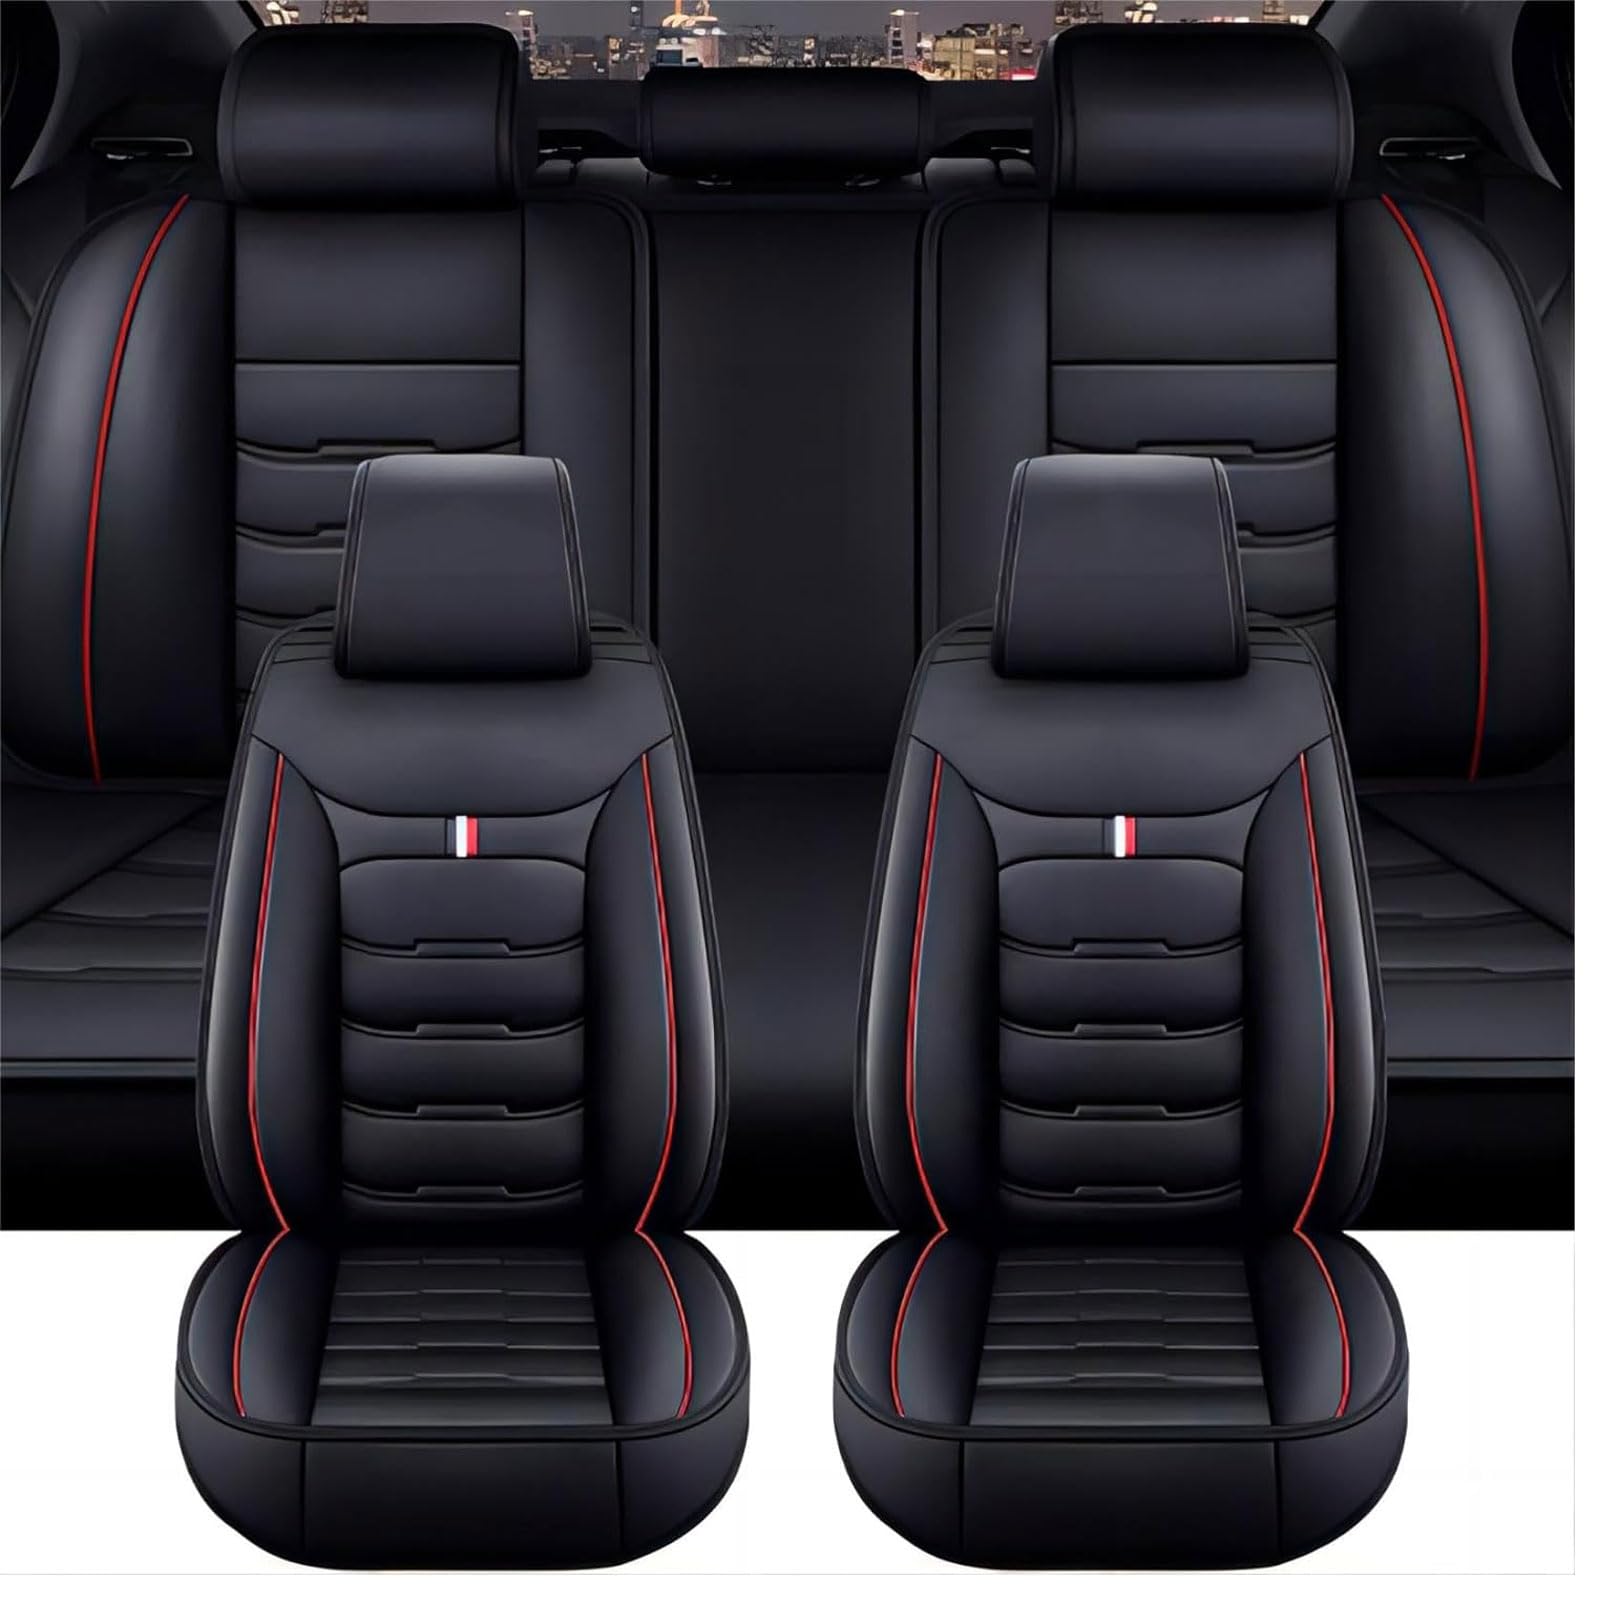 PEIXEN Auto Sitzbezüge für VW Beetle/Cabrio/ 2012 2013 2014 2015 2016, Leder 5 Sitzer Wasserdicht Atmungsaktiv Sitzschoner Sitzbezügesets, Autozubehör,Black-Red von PEIXEN